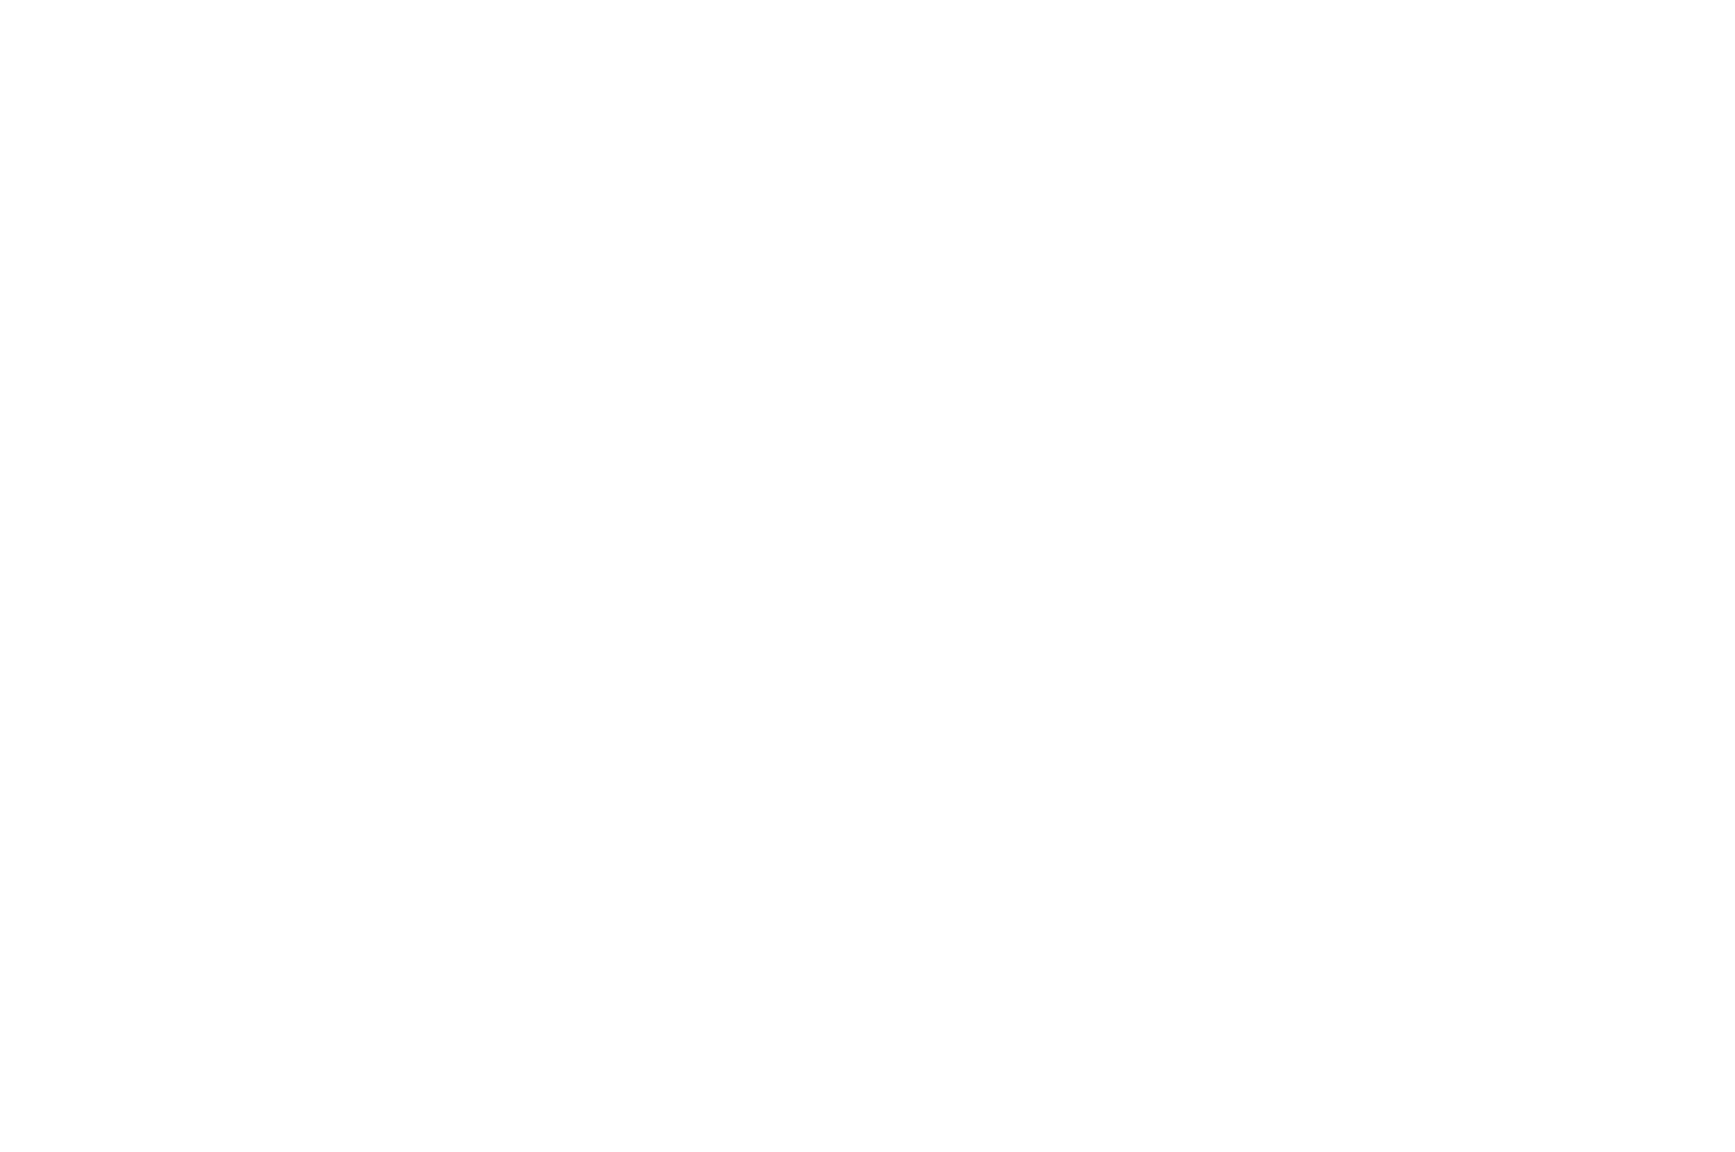 WINNER AMATEUR FILM - World Film Carnival - Singapore - 2020